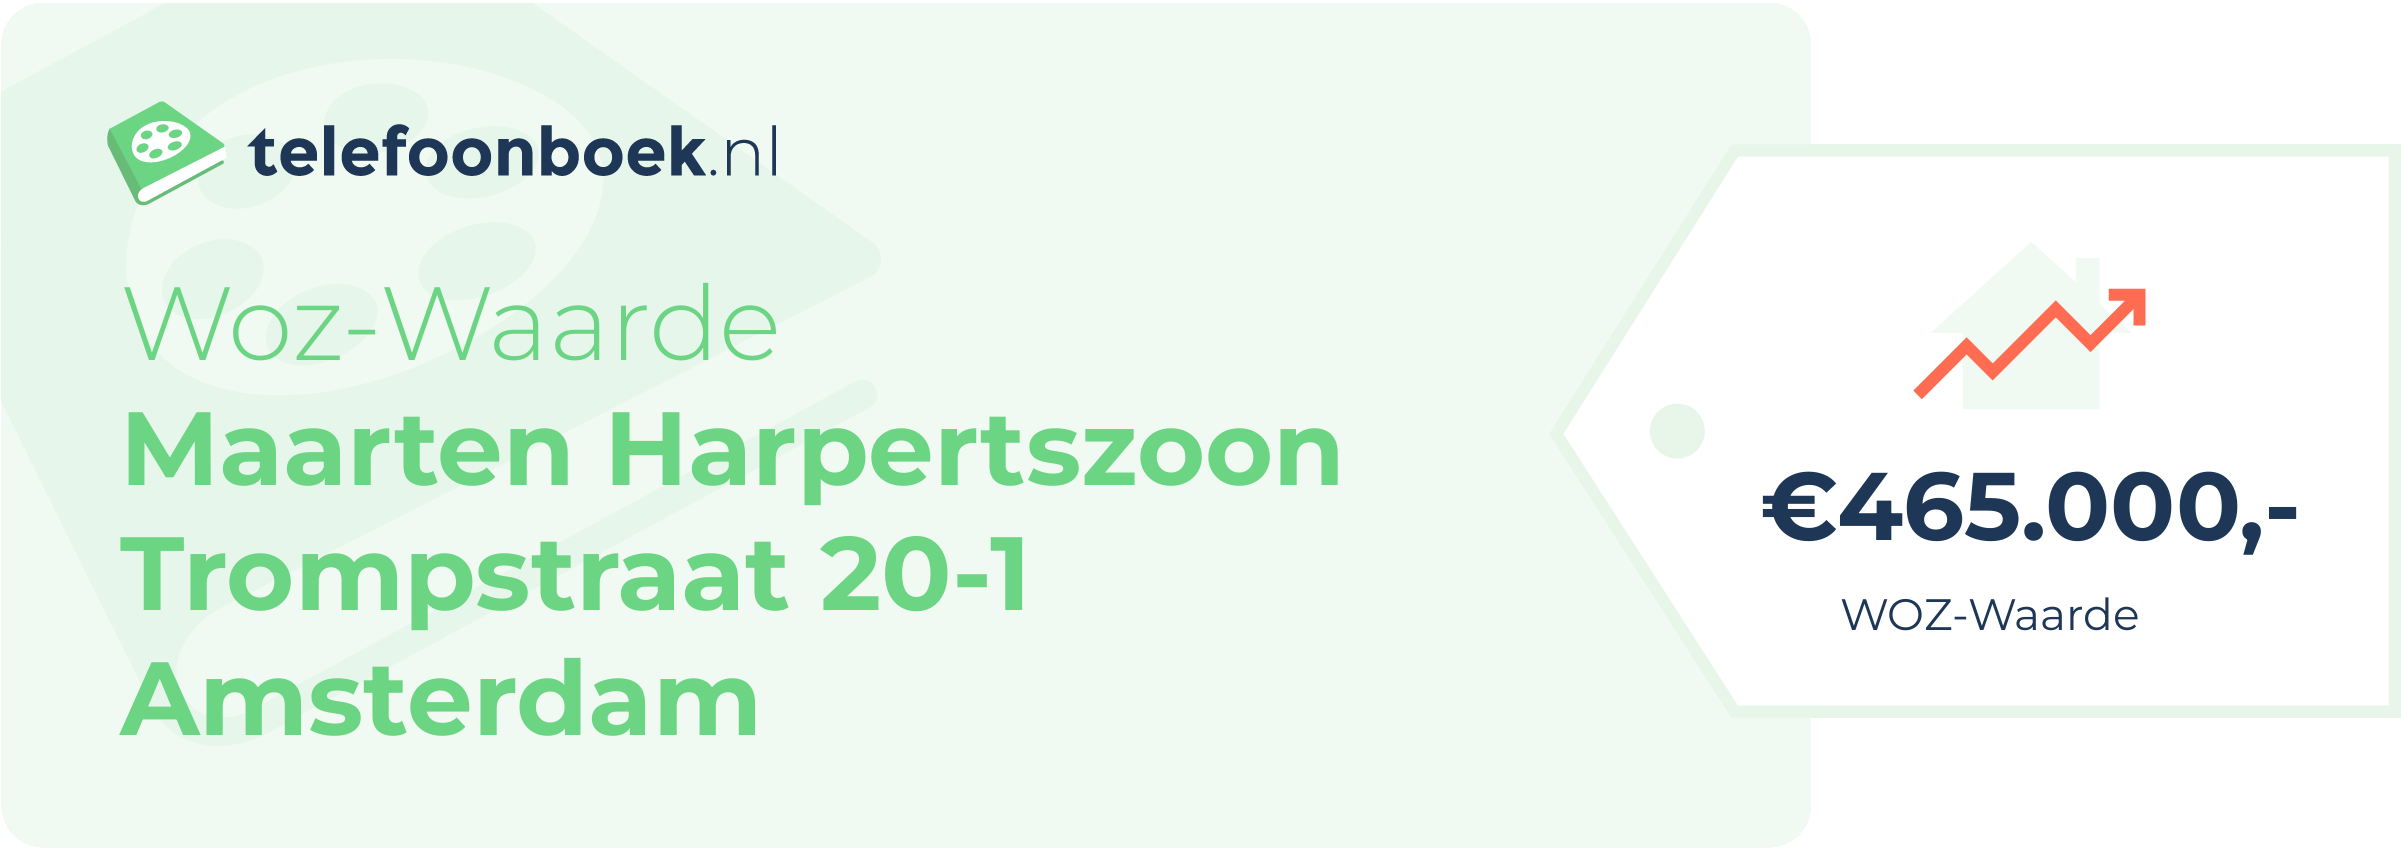 WOZ-waarde Maarten Harpertszoon Trompstraat 20-1 Amsterdam